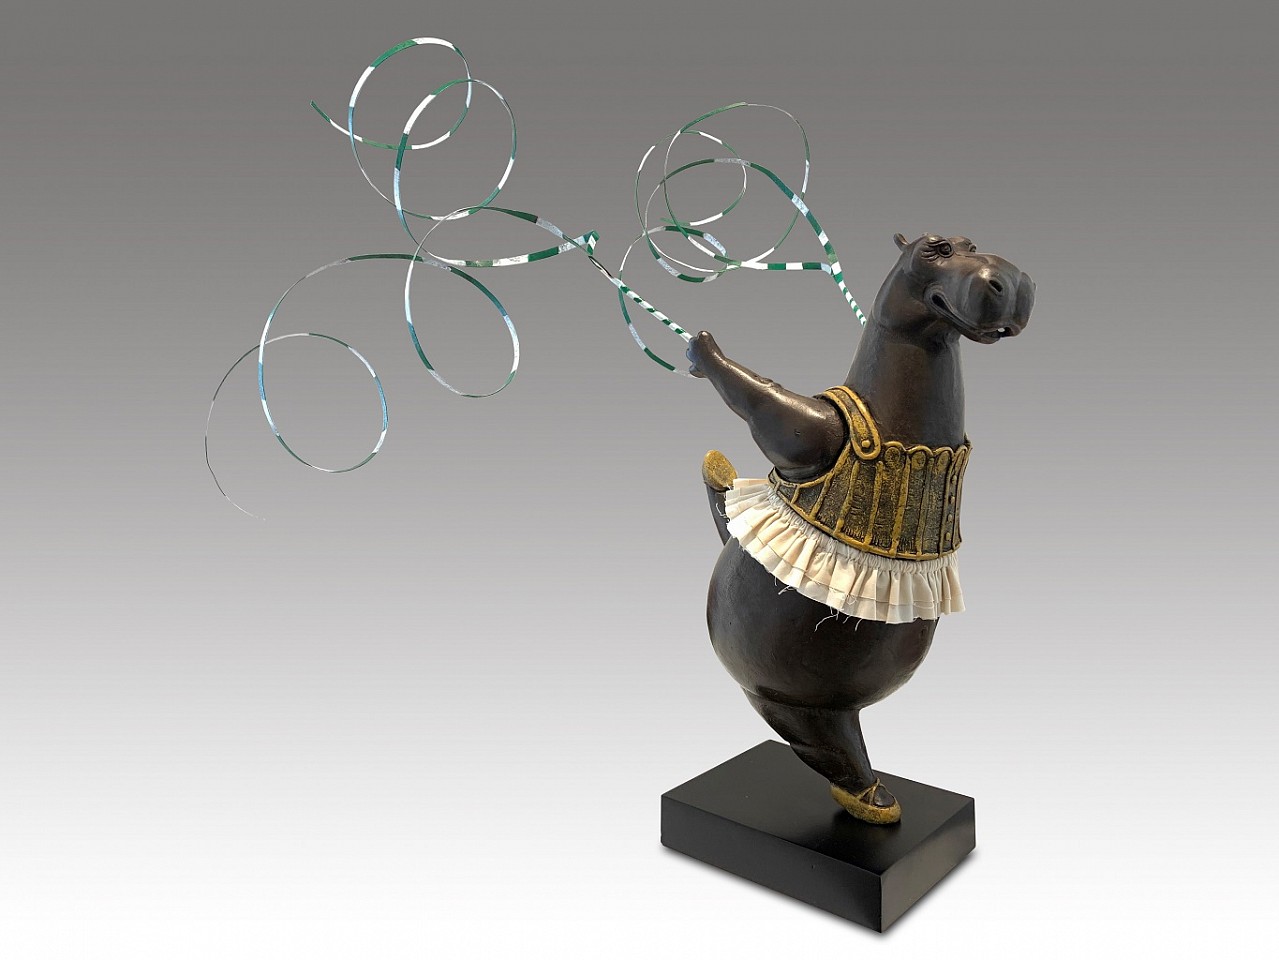 Bjorn Skaarup, Hippo Circus Ribbon Dancer, Ed. of 9, 2021
bronze, 16 x 18 x 15 in. (40.6 x 45.7 x 38.1 cm)
BS211203